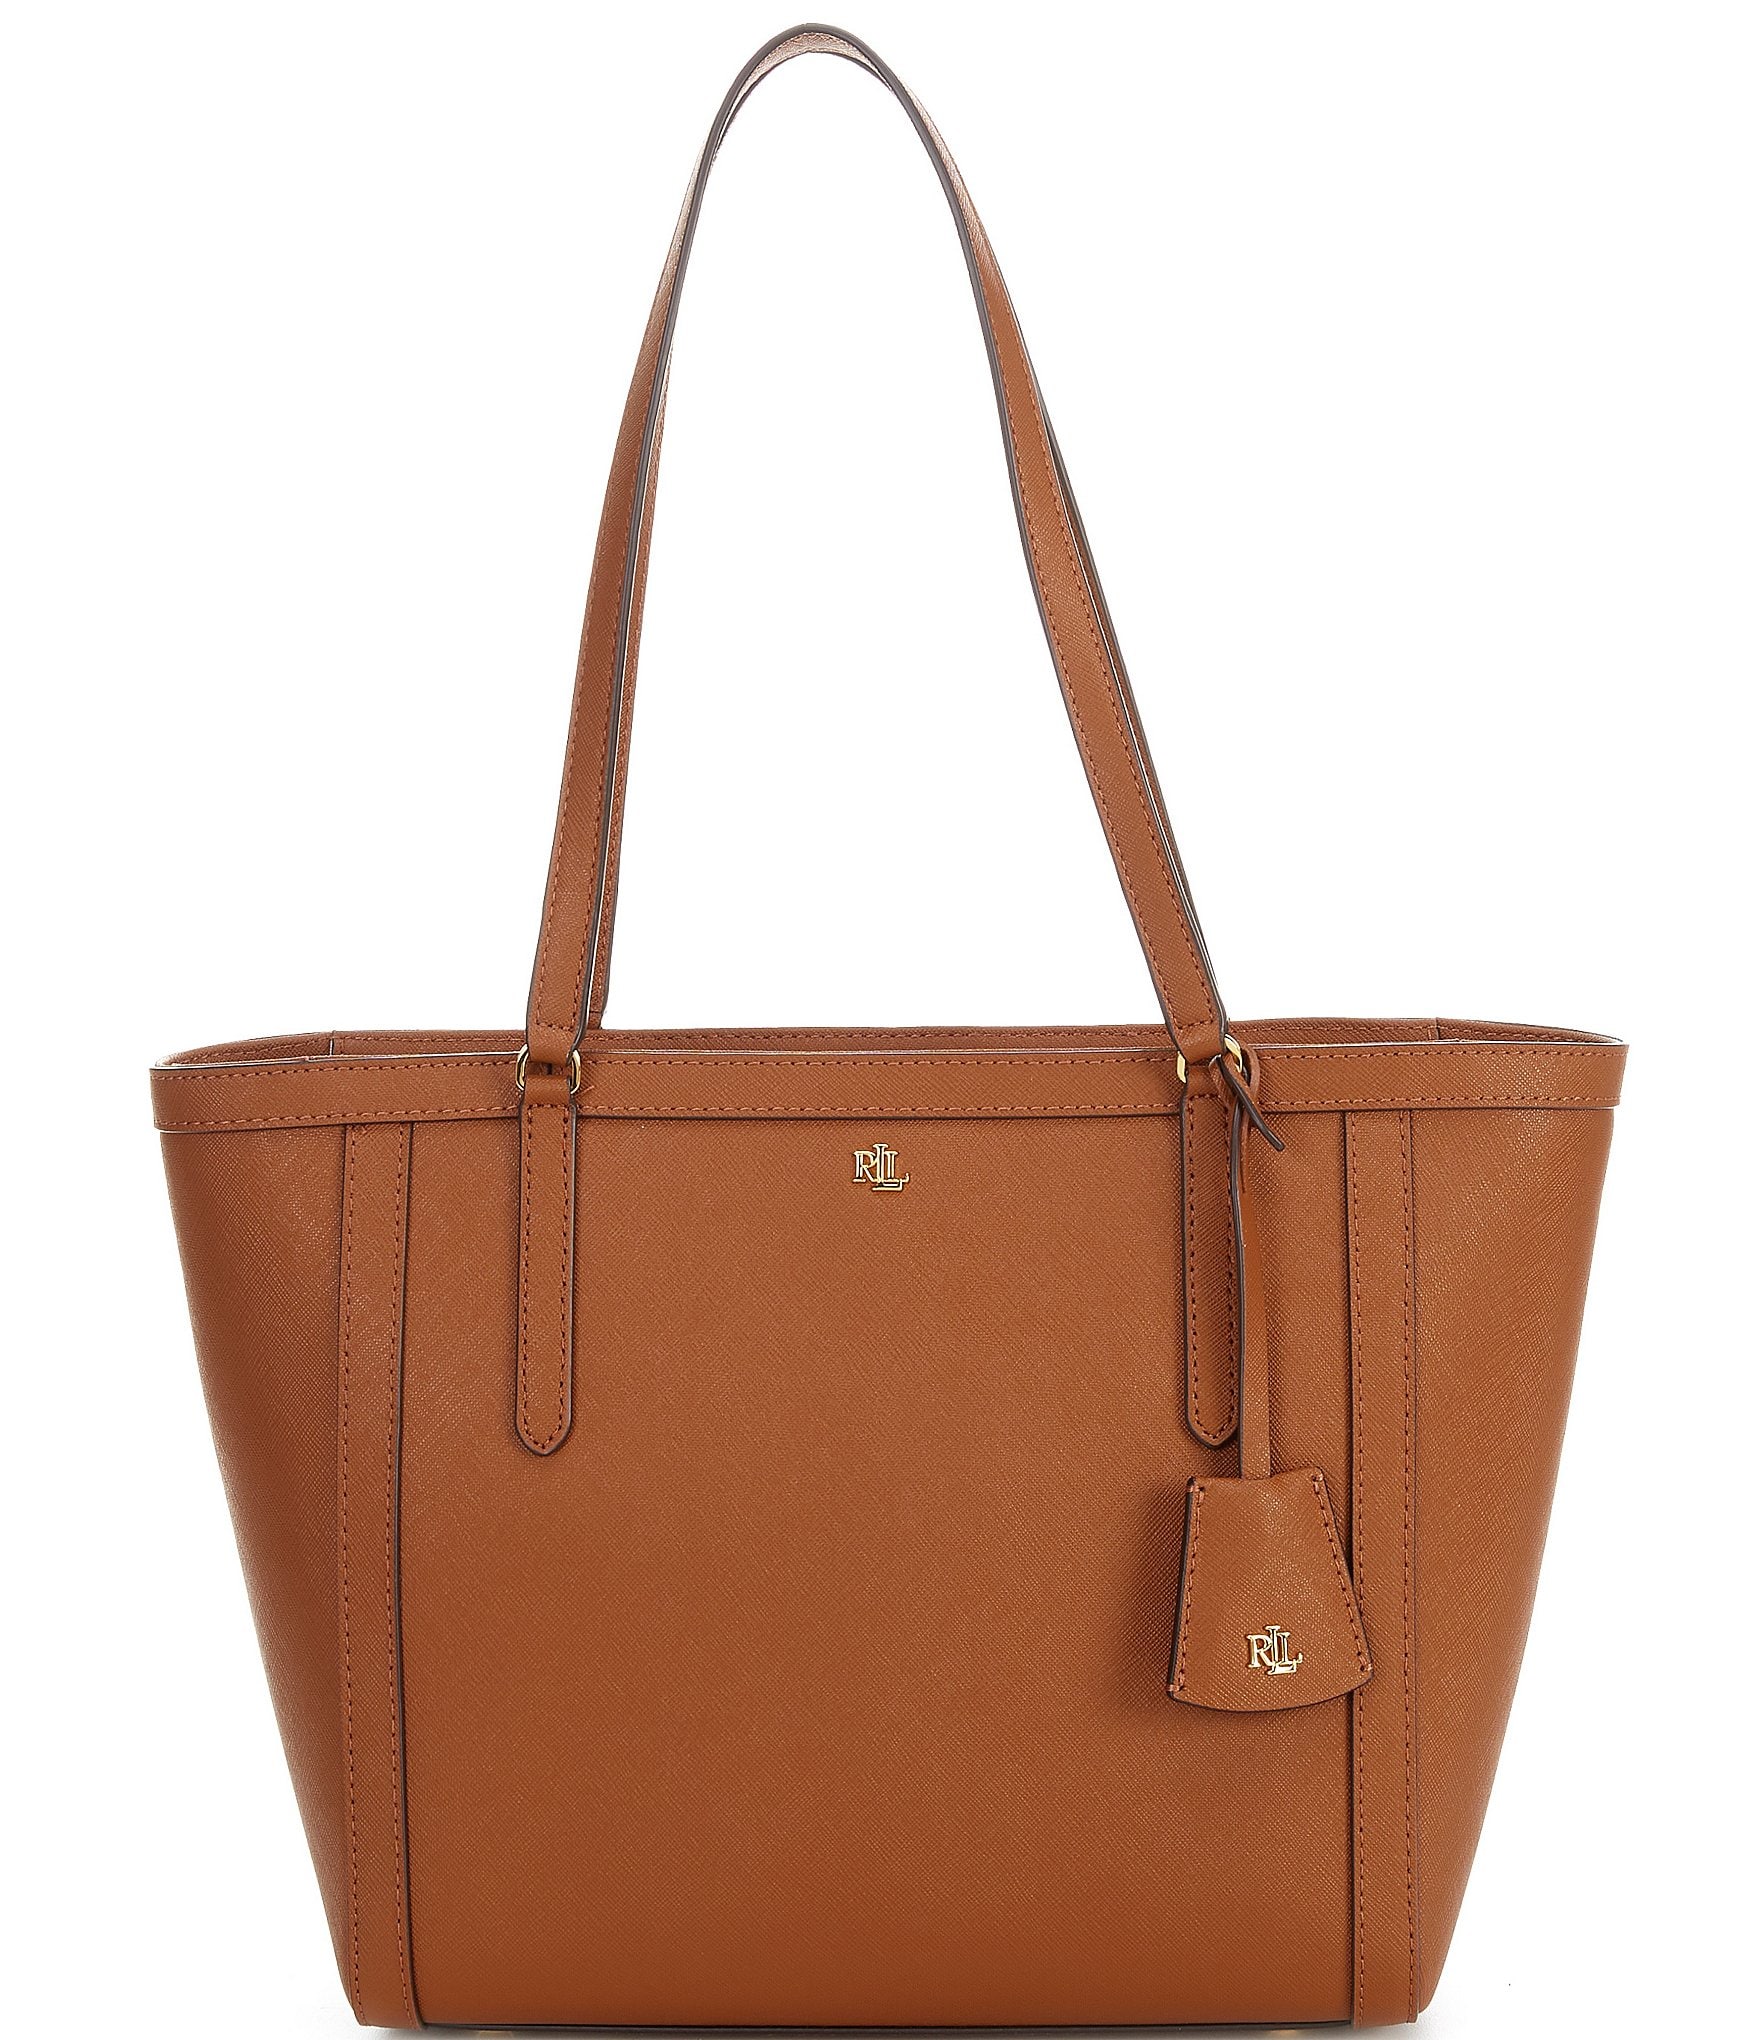 Ralph Lauren Bags & Handbags for Women sale - discounted price | FASHIOLA  INDIA